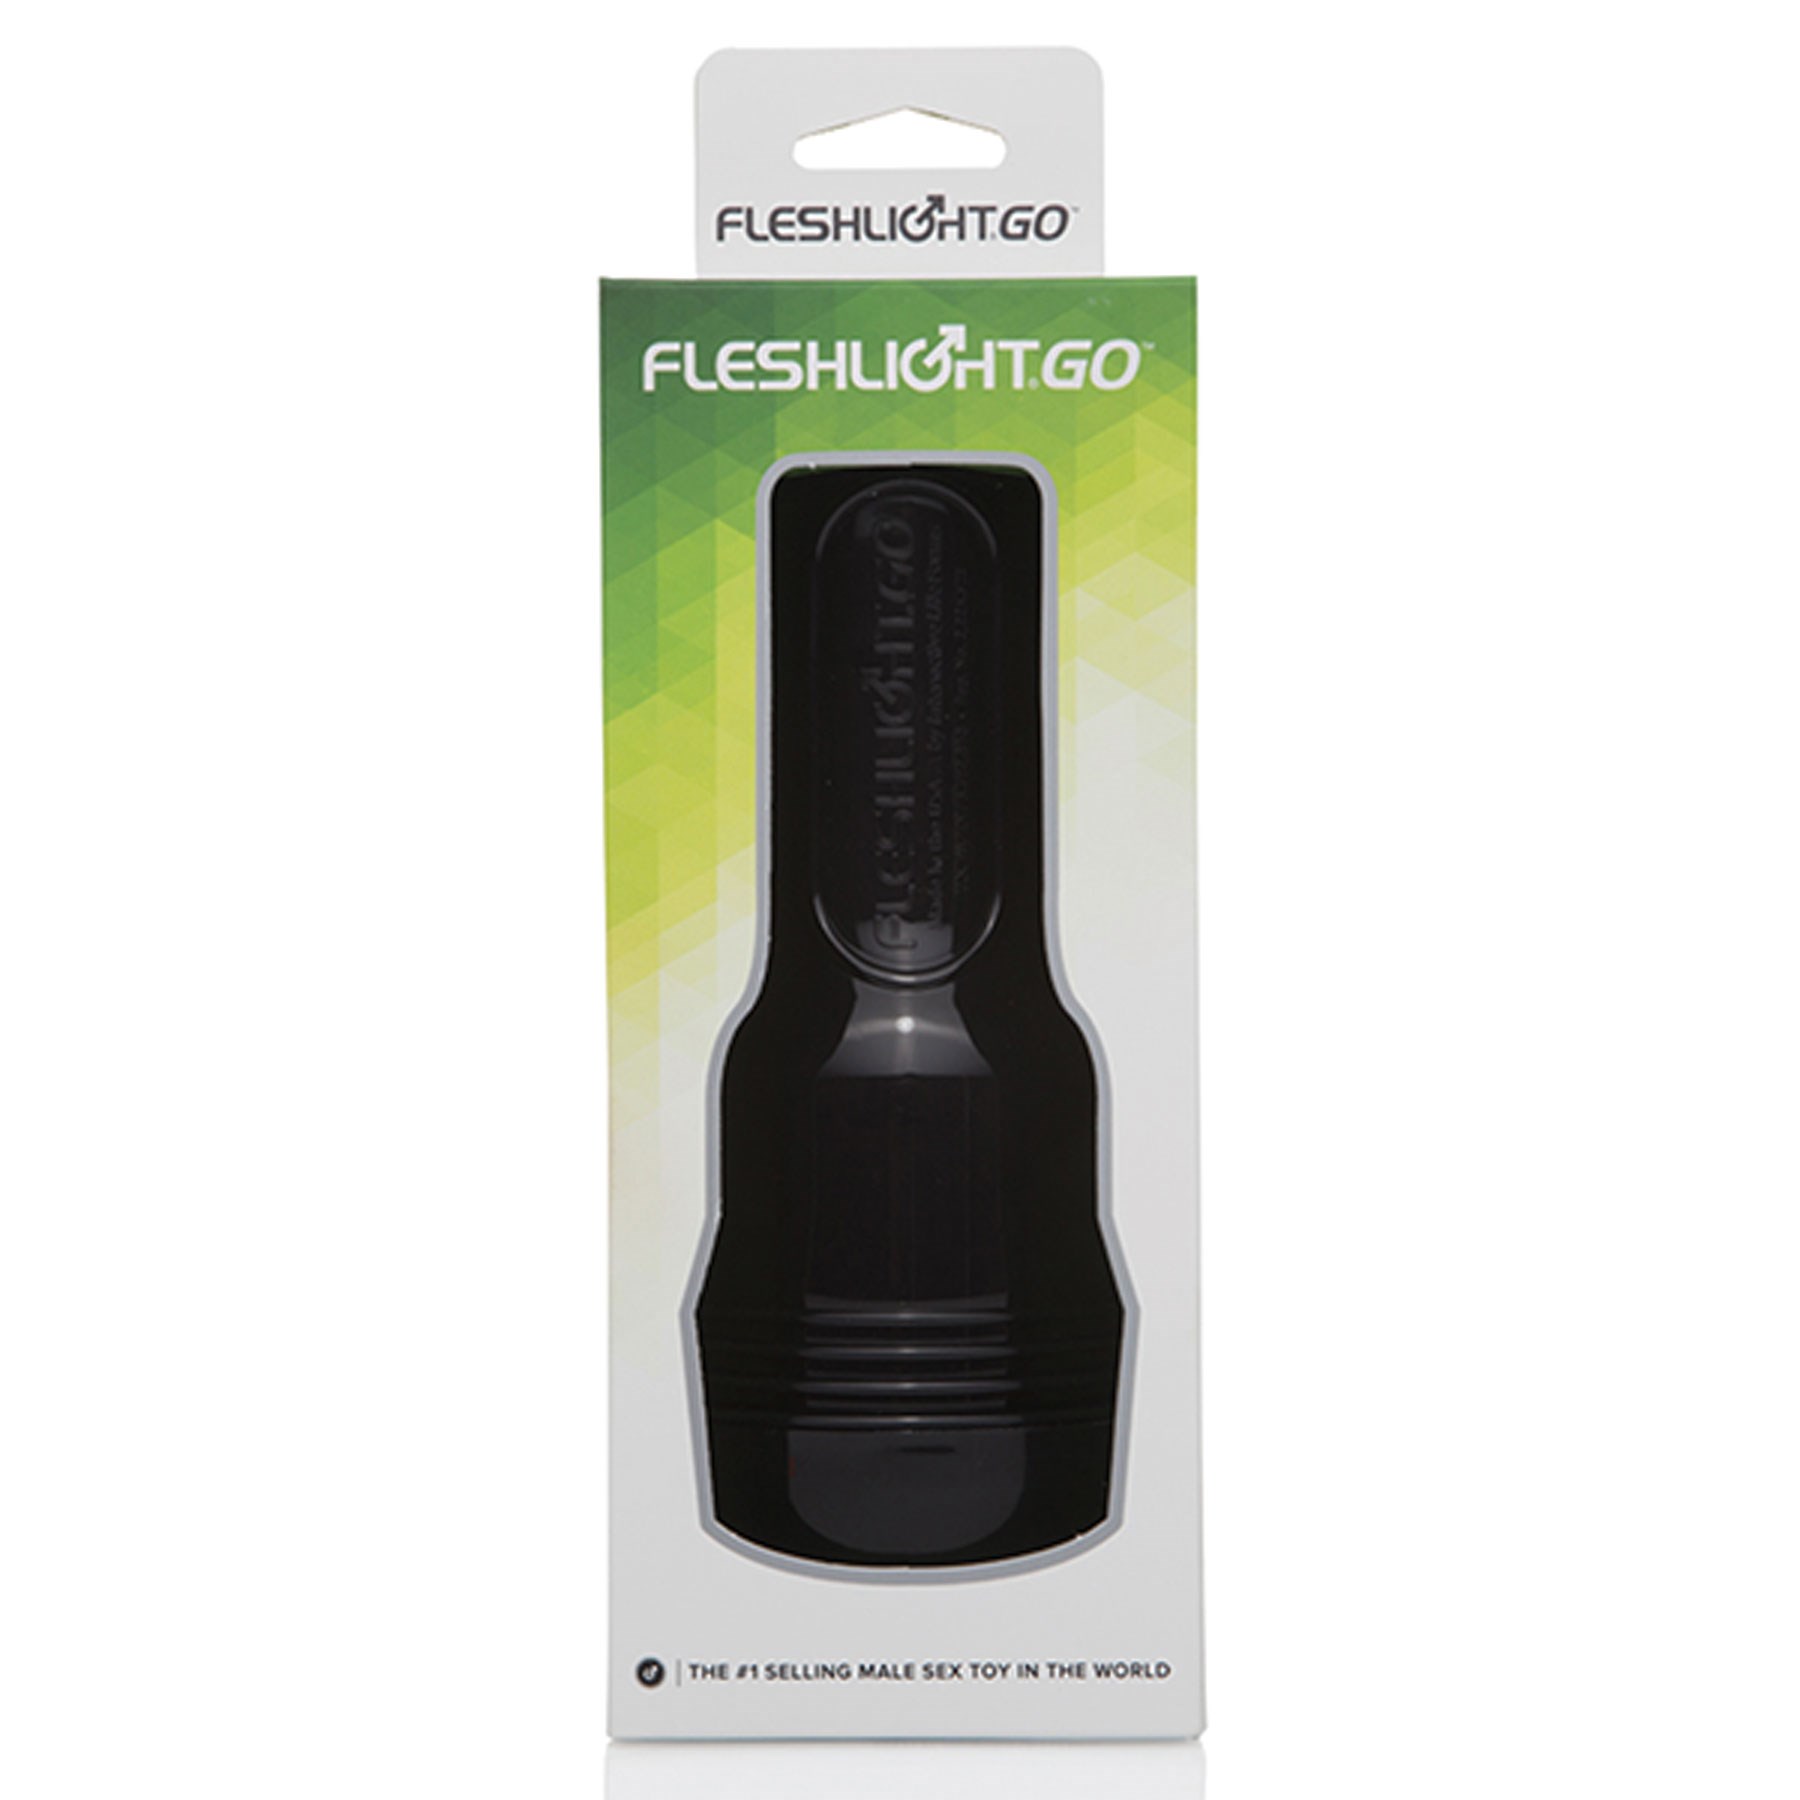 Fleshlight Go: Surge box